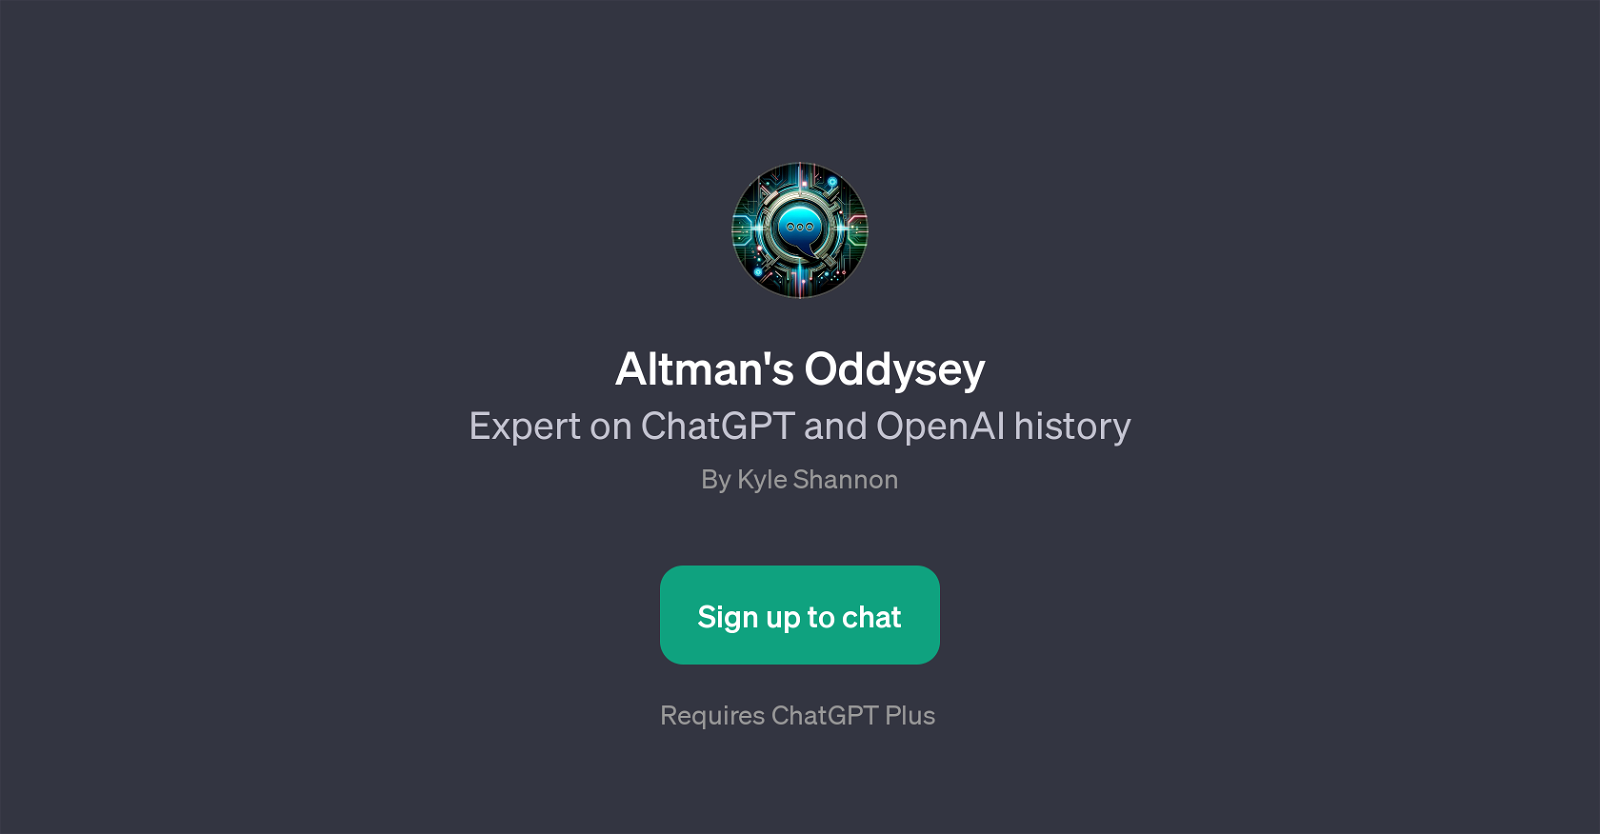 Altman's Oddysey website